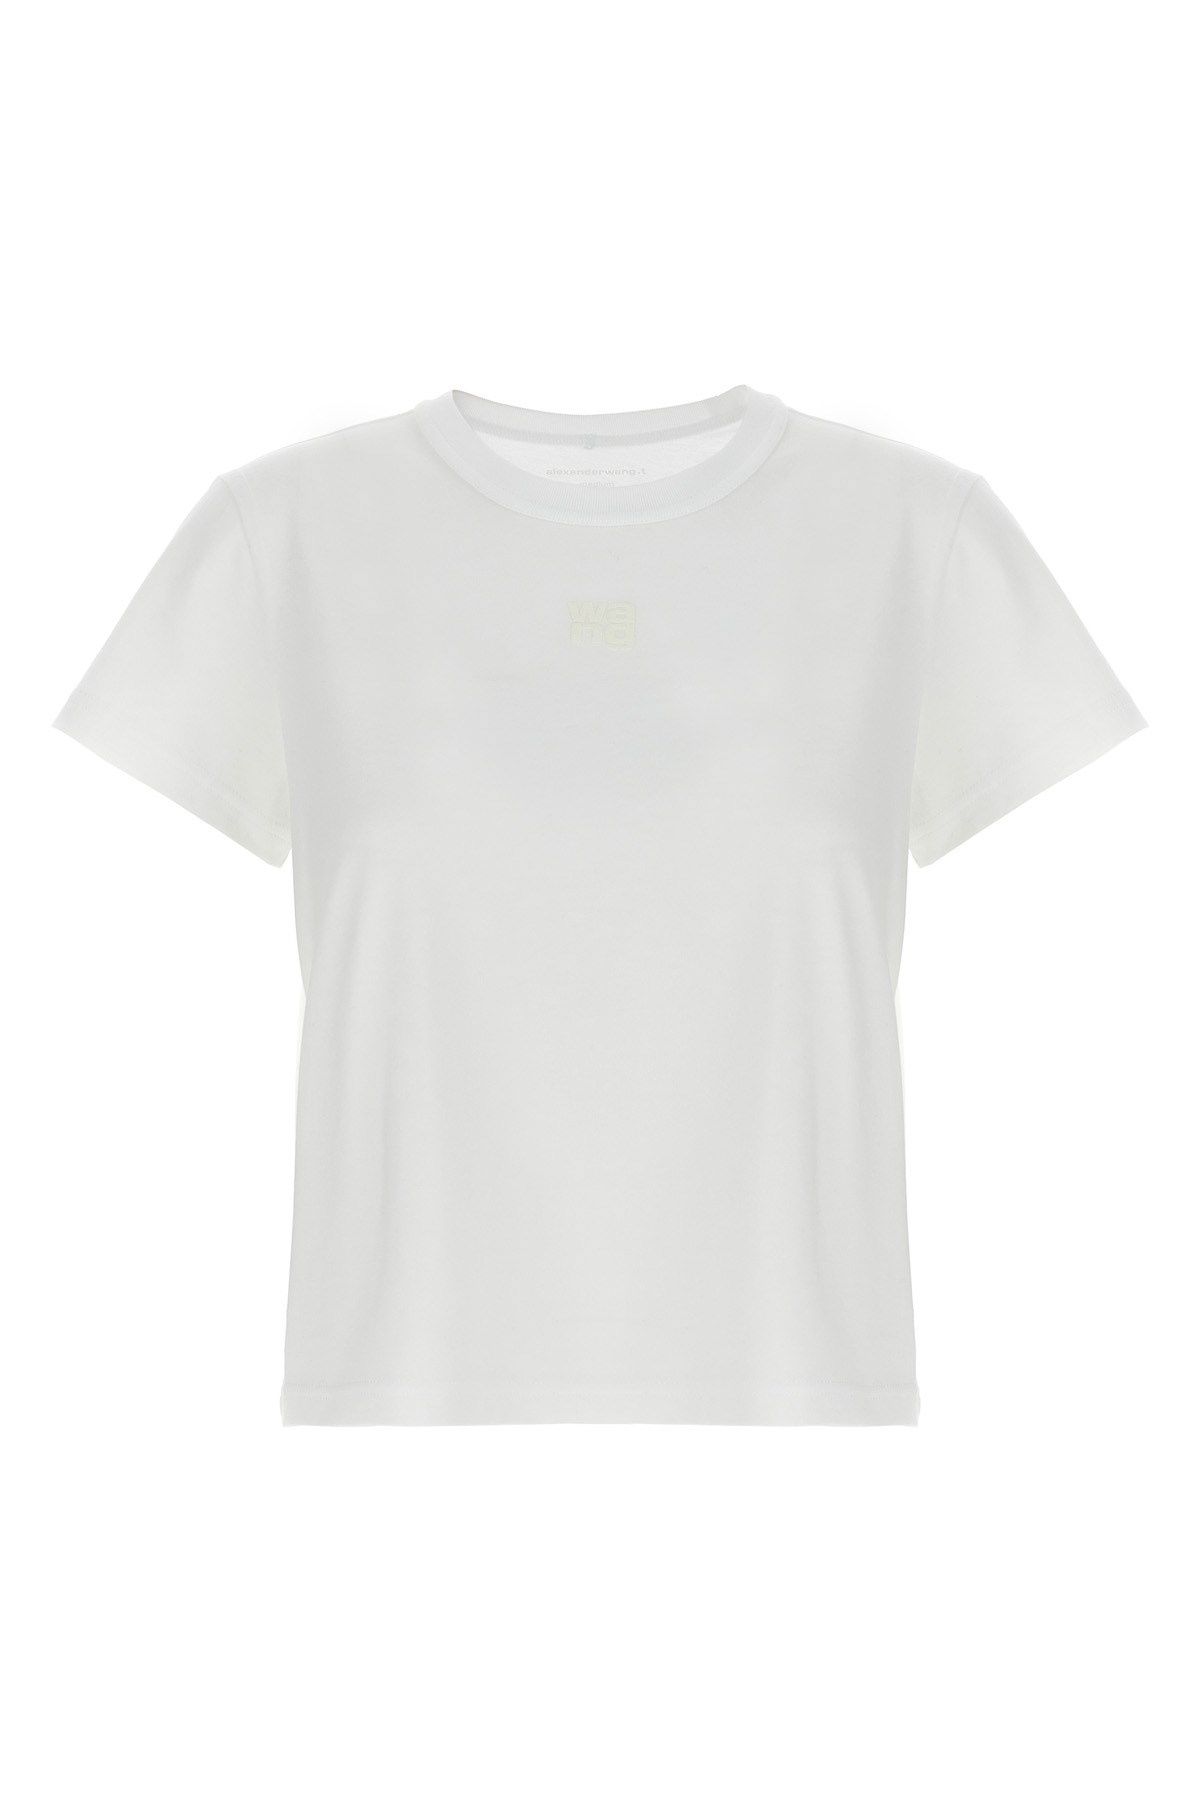 'Essential JSY Shrunk' T-shirt - 1